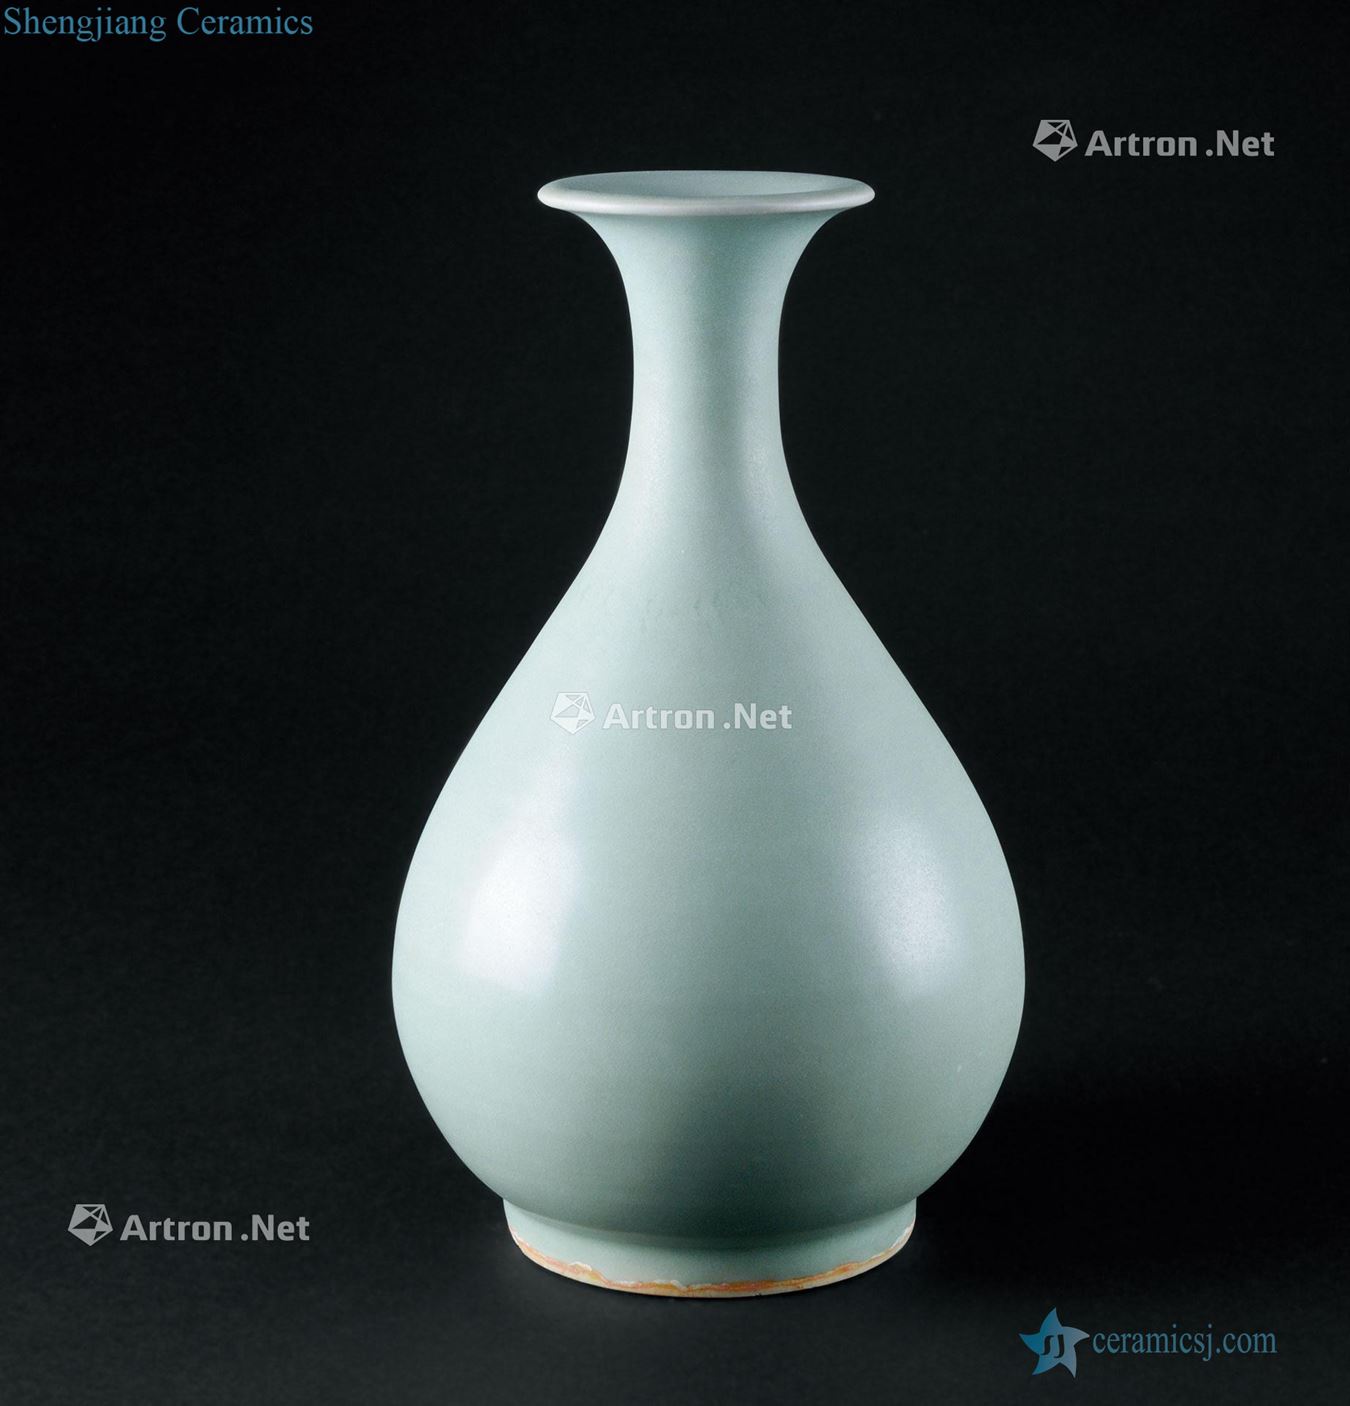 The yuan dynasty, Ming dynasty (1279-1644) longquan celadon okho spring bottle